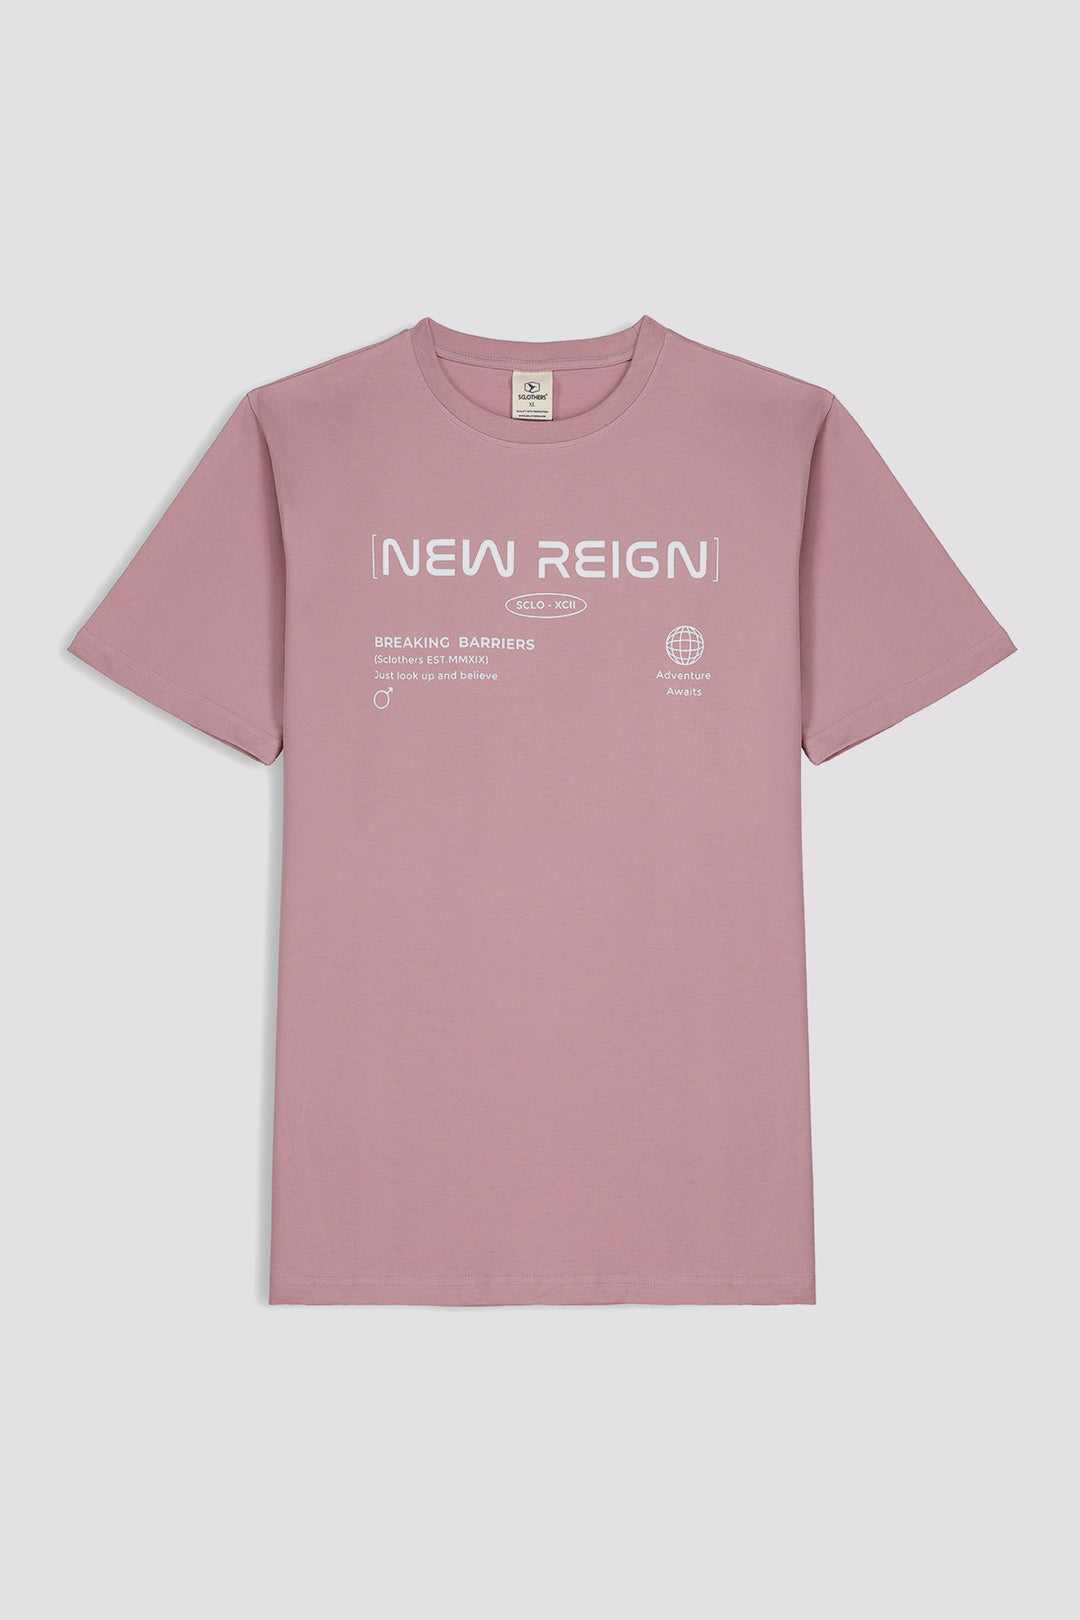 Palmolive New Reign Graphic T-Shirt - S23 - MT0310R